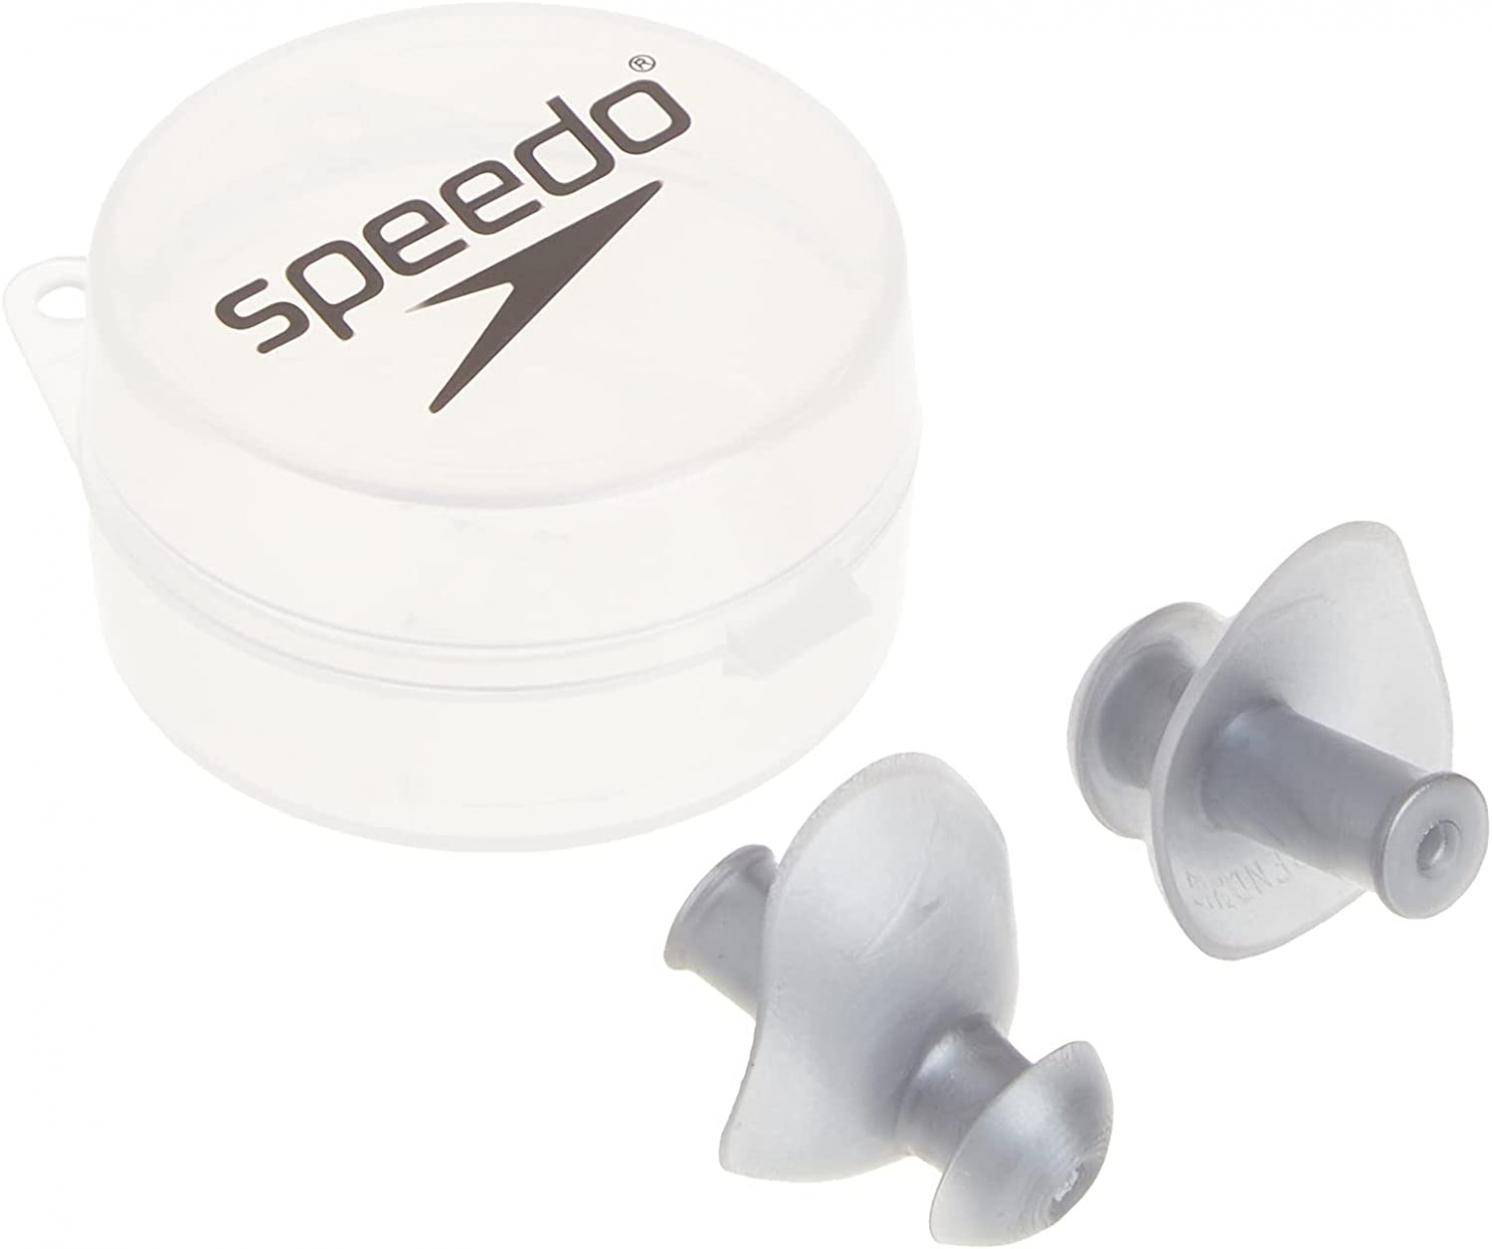 Speedo Unisex-Adult Swim Training Ergo Ear Plugs